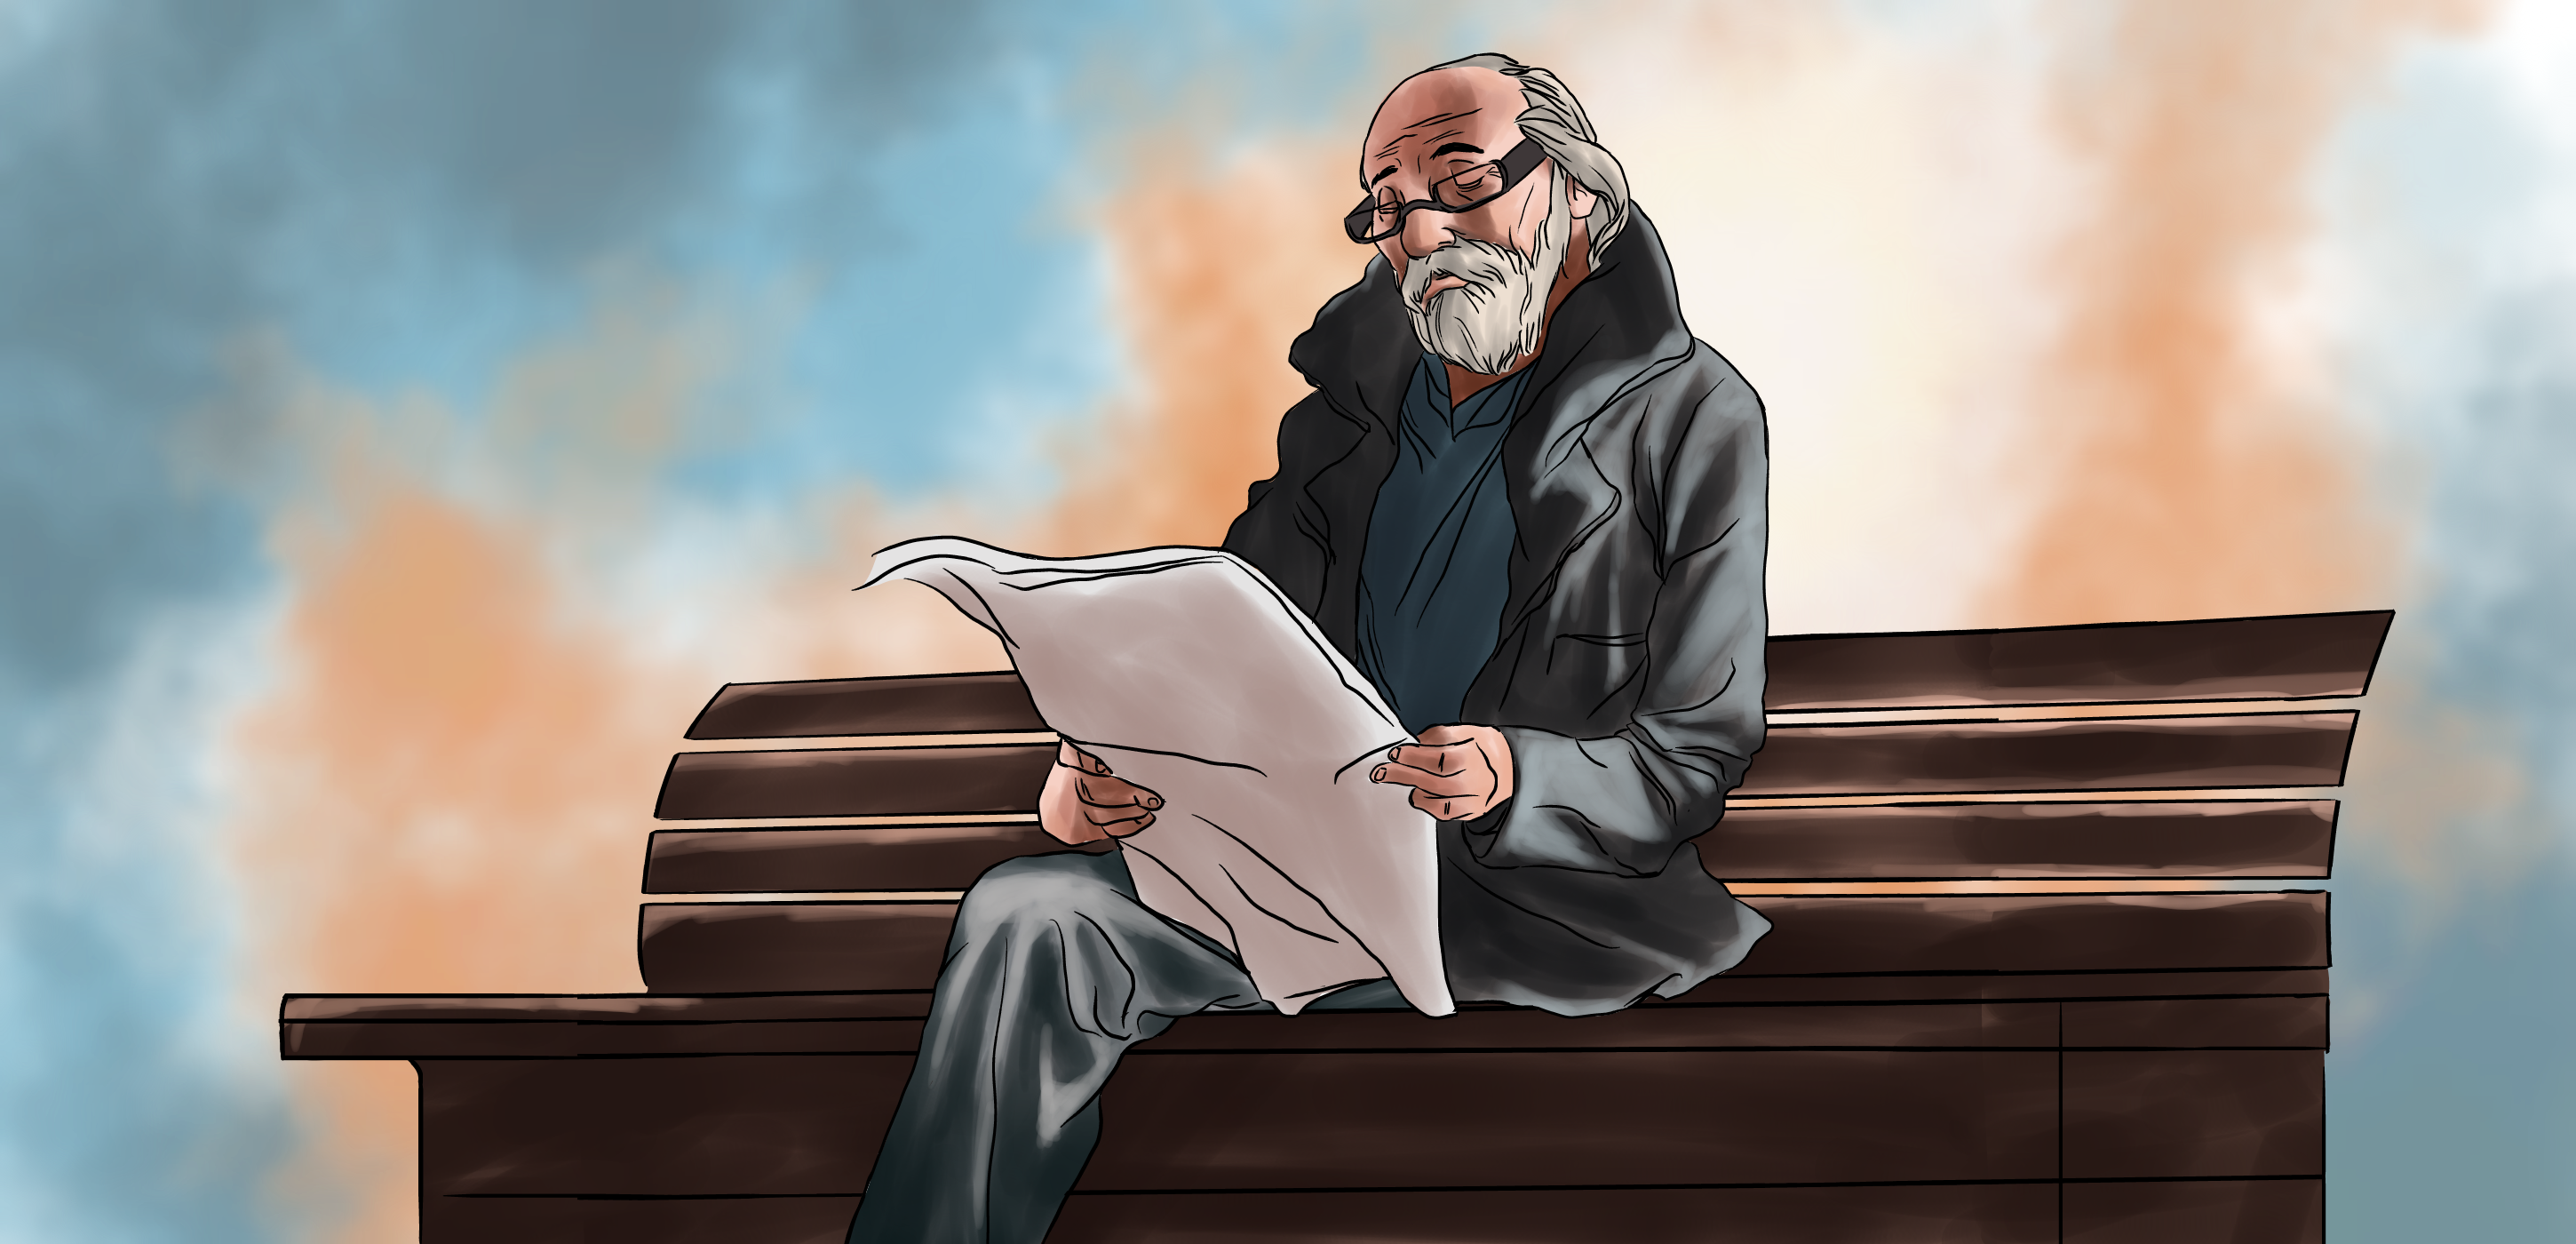 Senior Man Reading